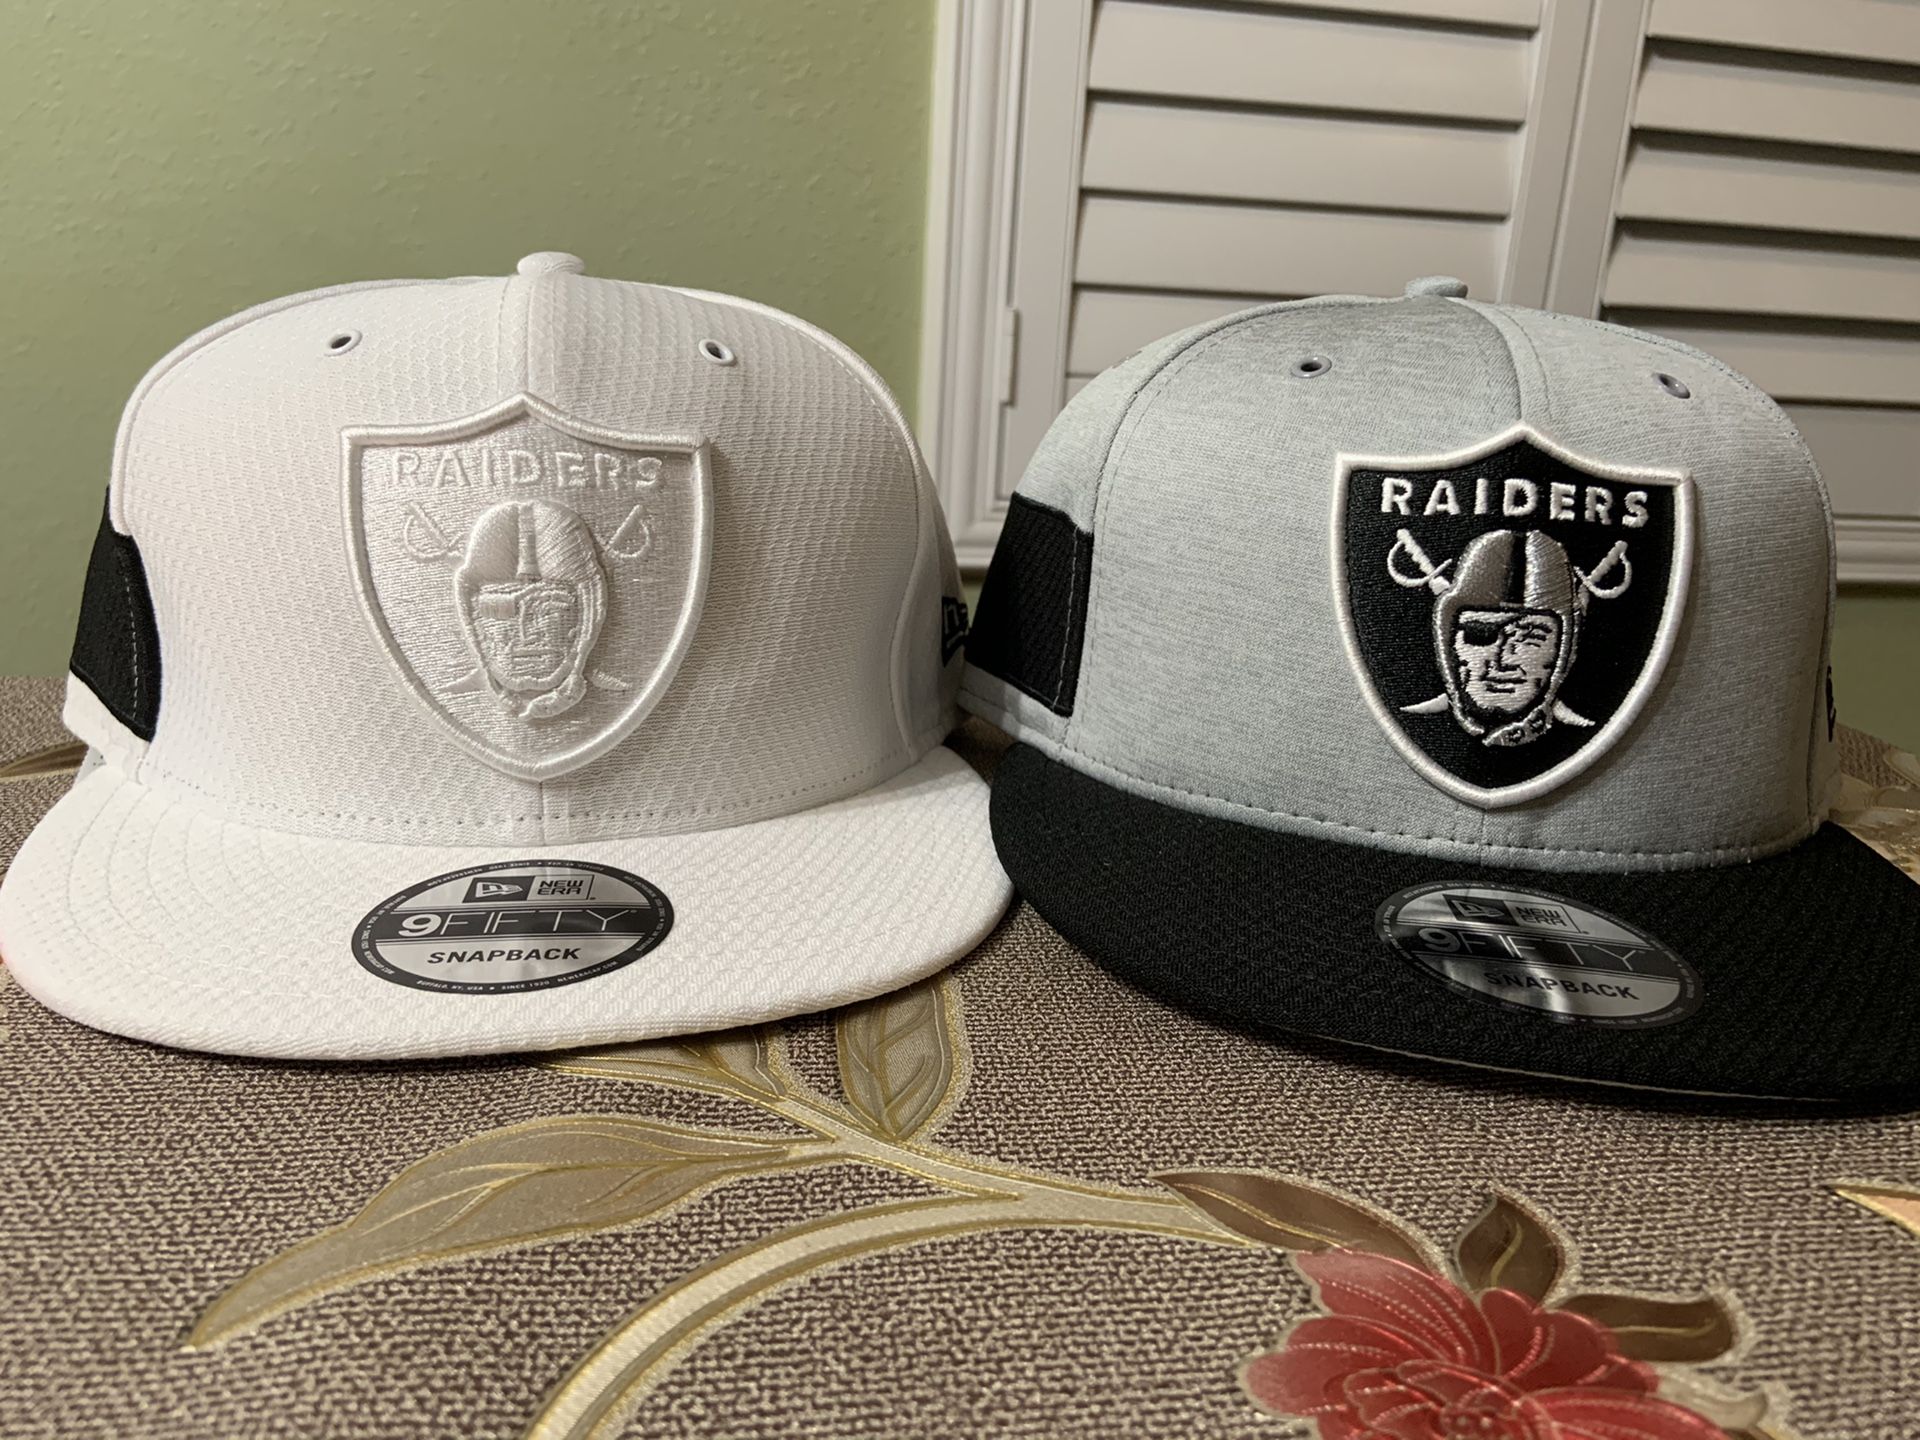 2 Raider Hats